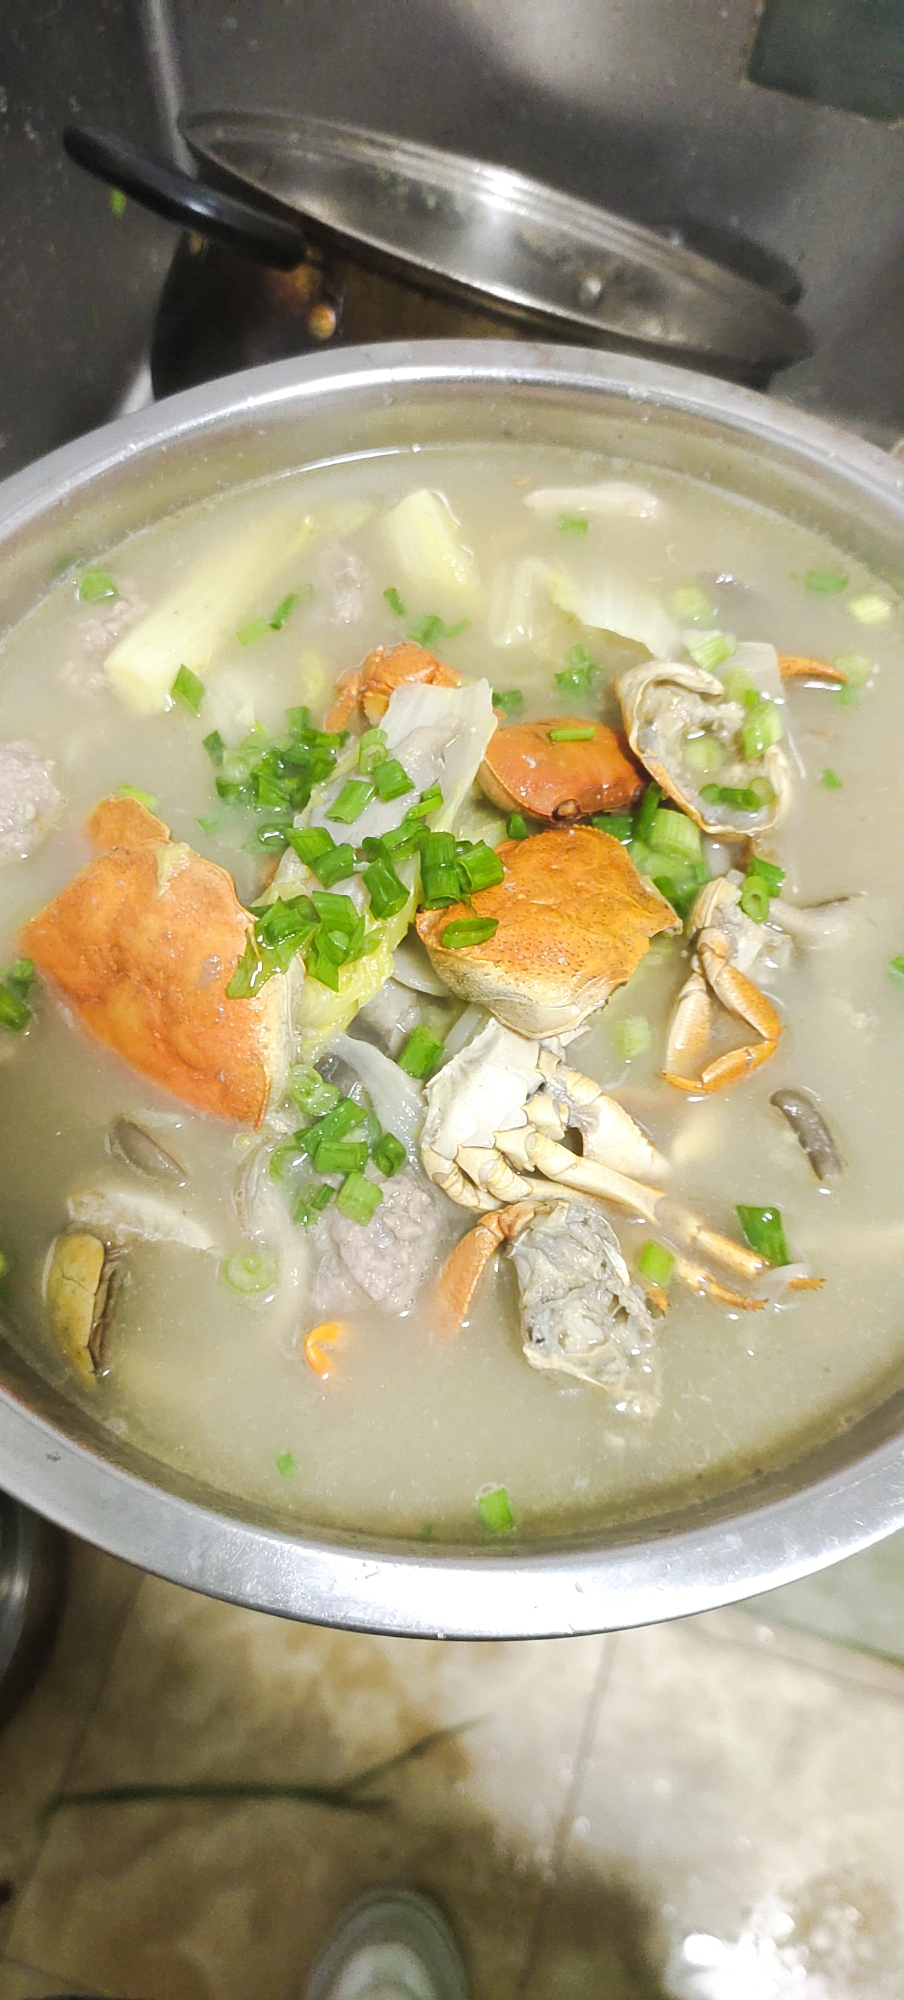 土螃蟹汤